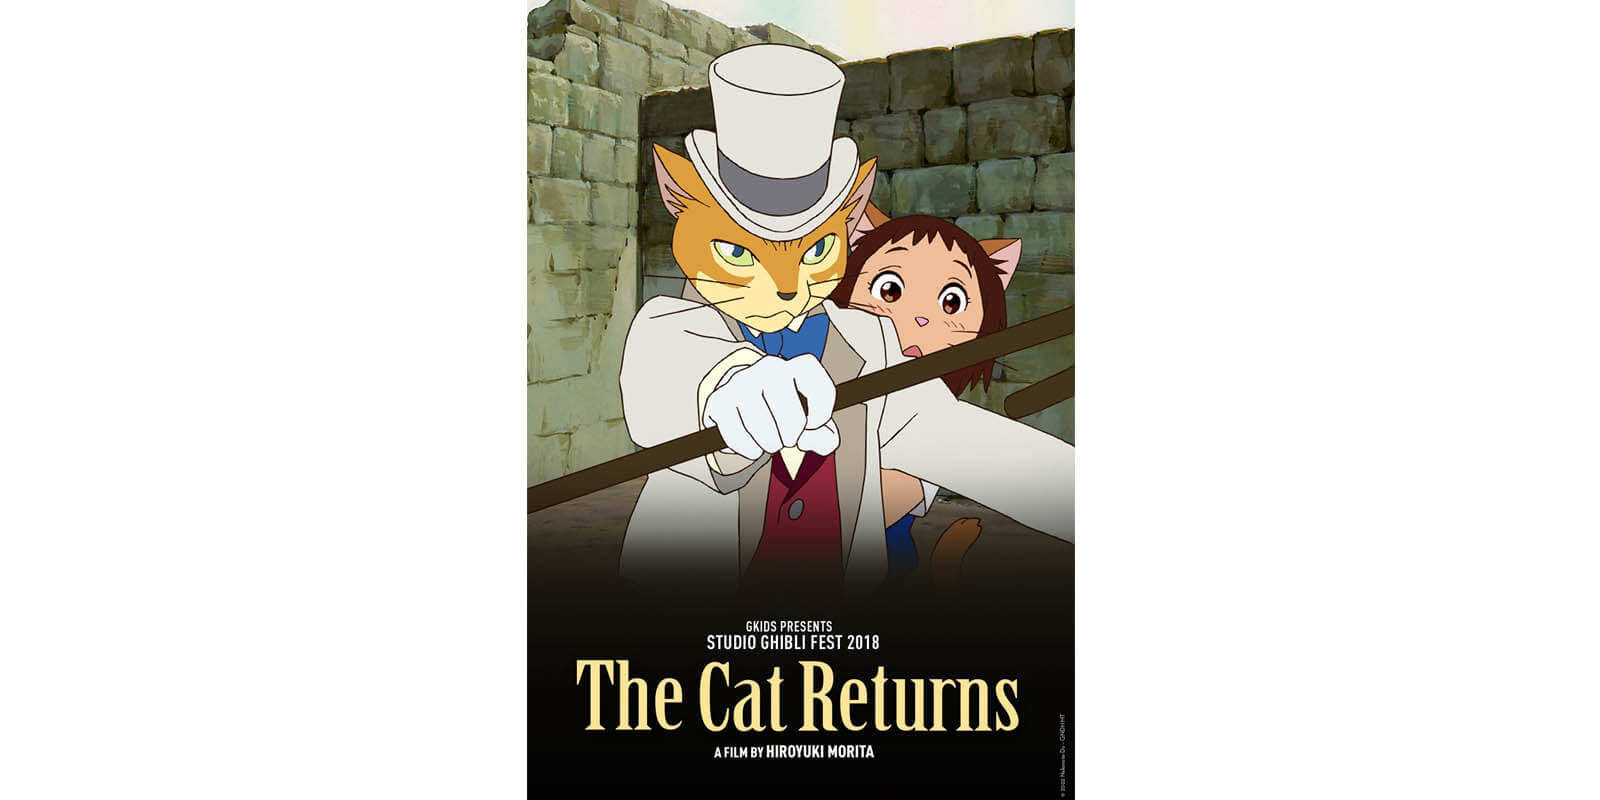 The Cat Returns (Studio Ghibli Fest 2018)